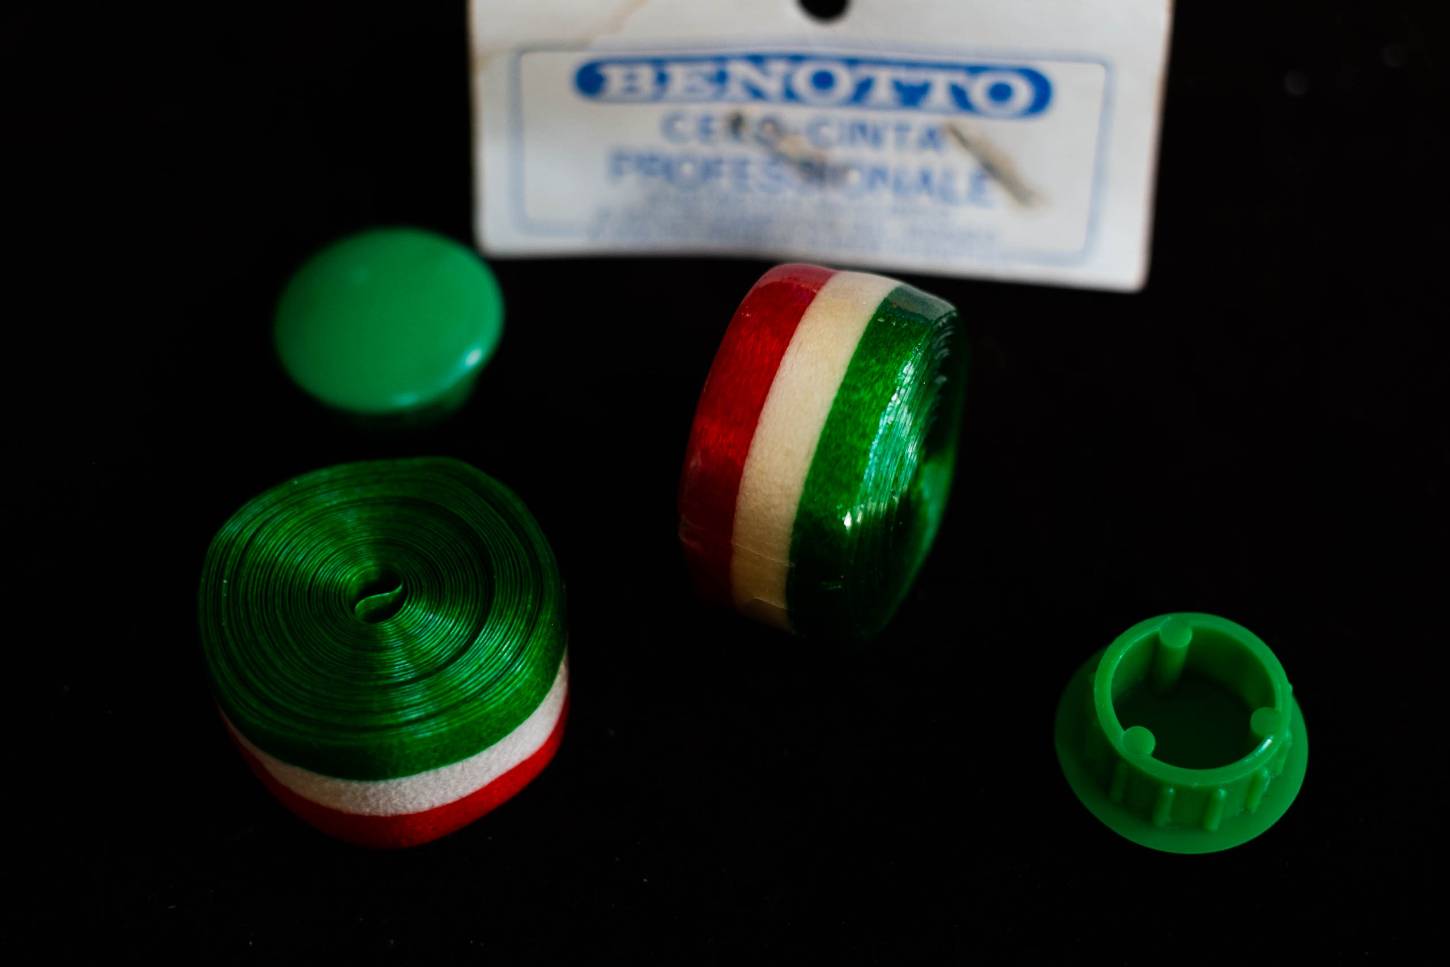 NOS Benotto Professionale Celo Vintage Lenkerband Italia in rot/weiß/grün